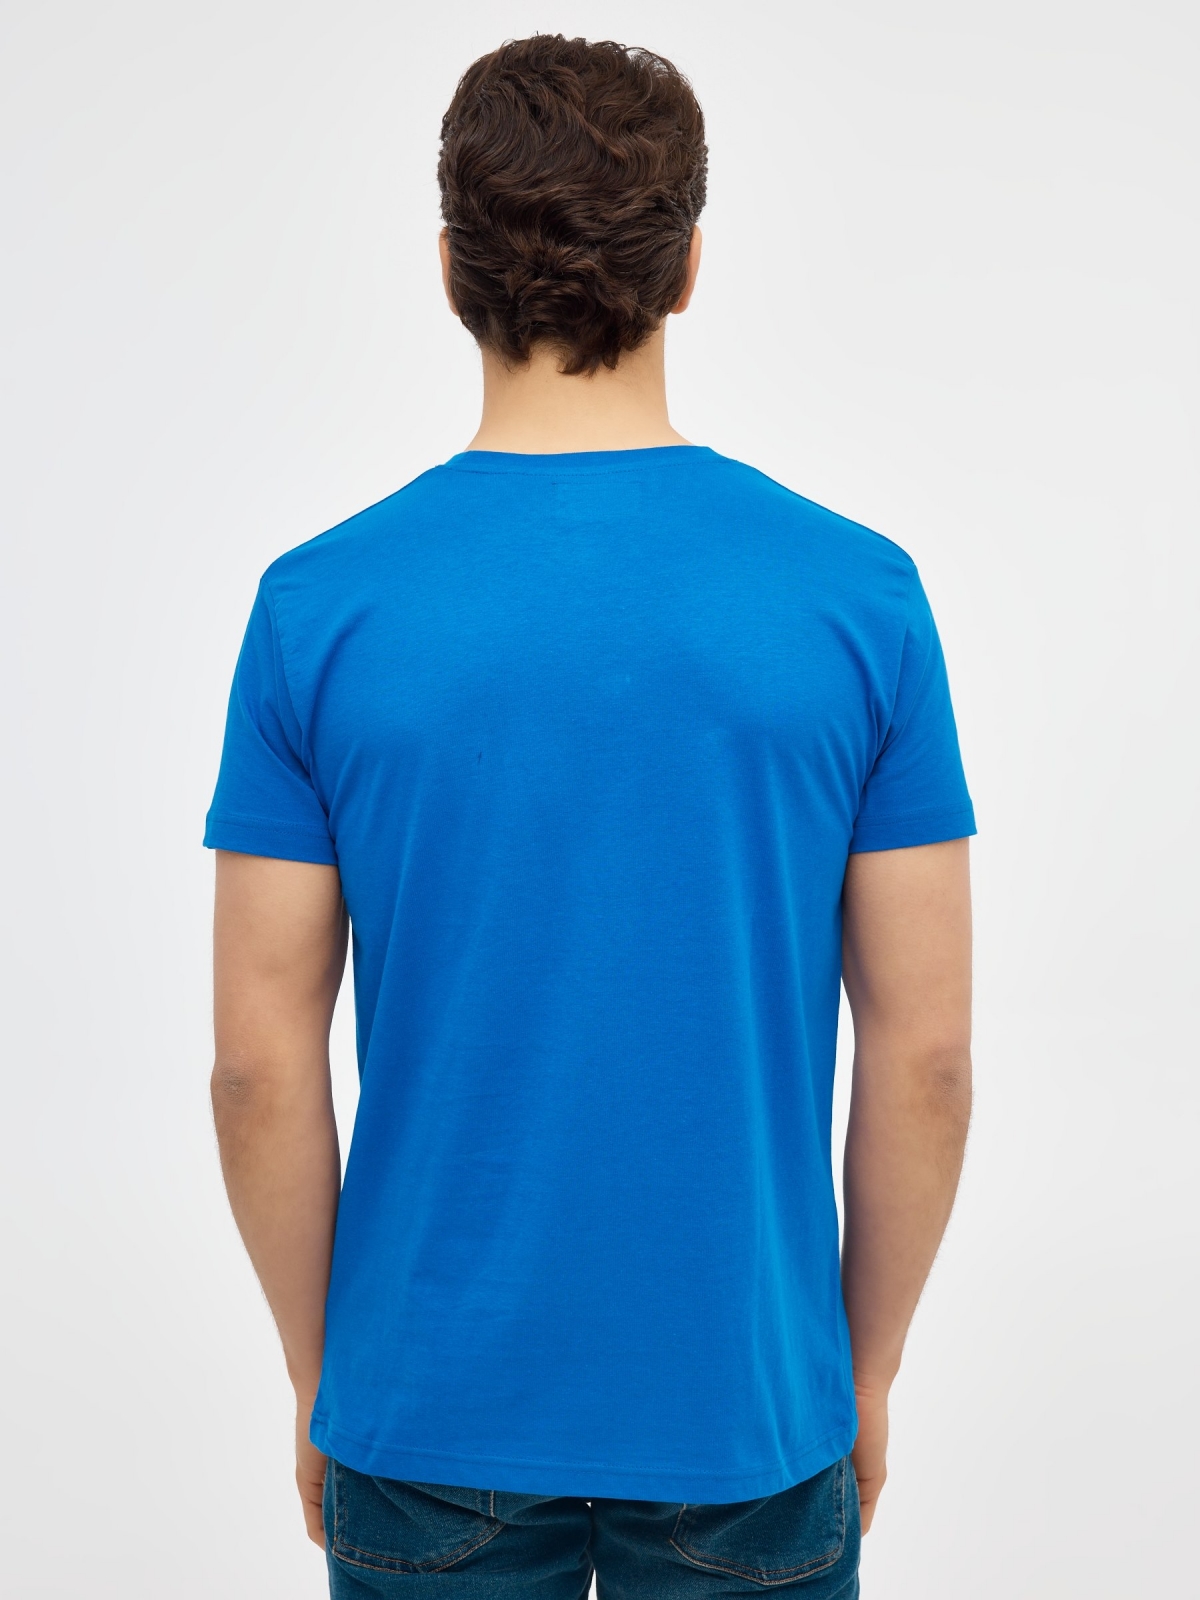 Basic short sleeve t-shirt ducat blue middle back view